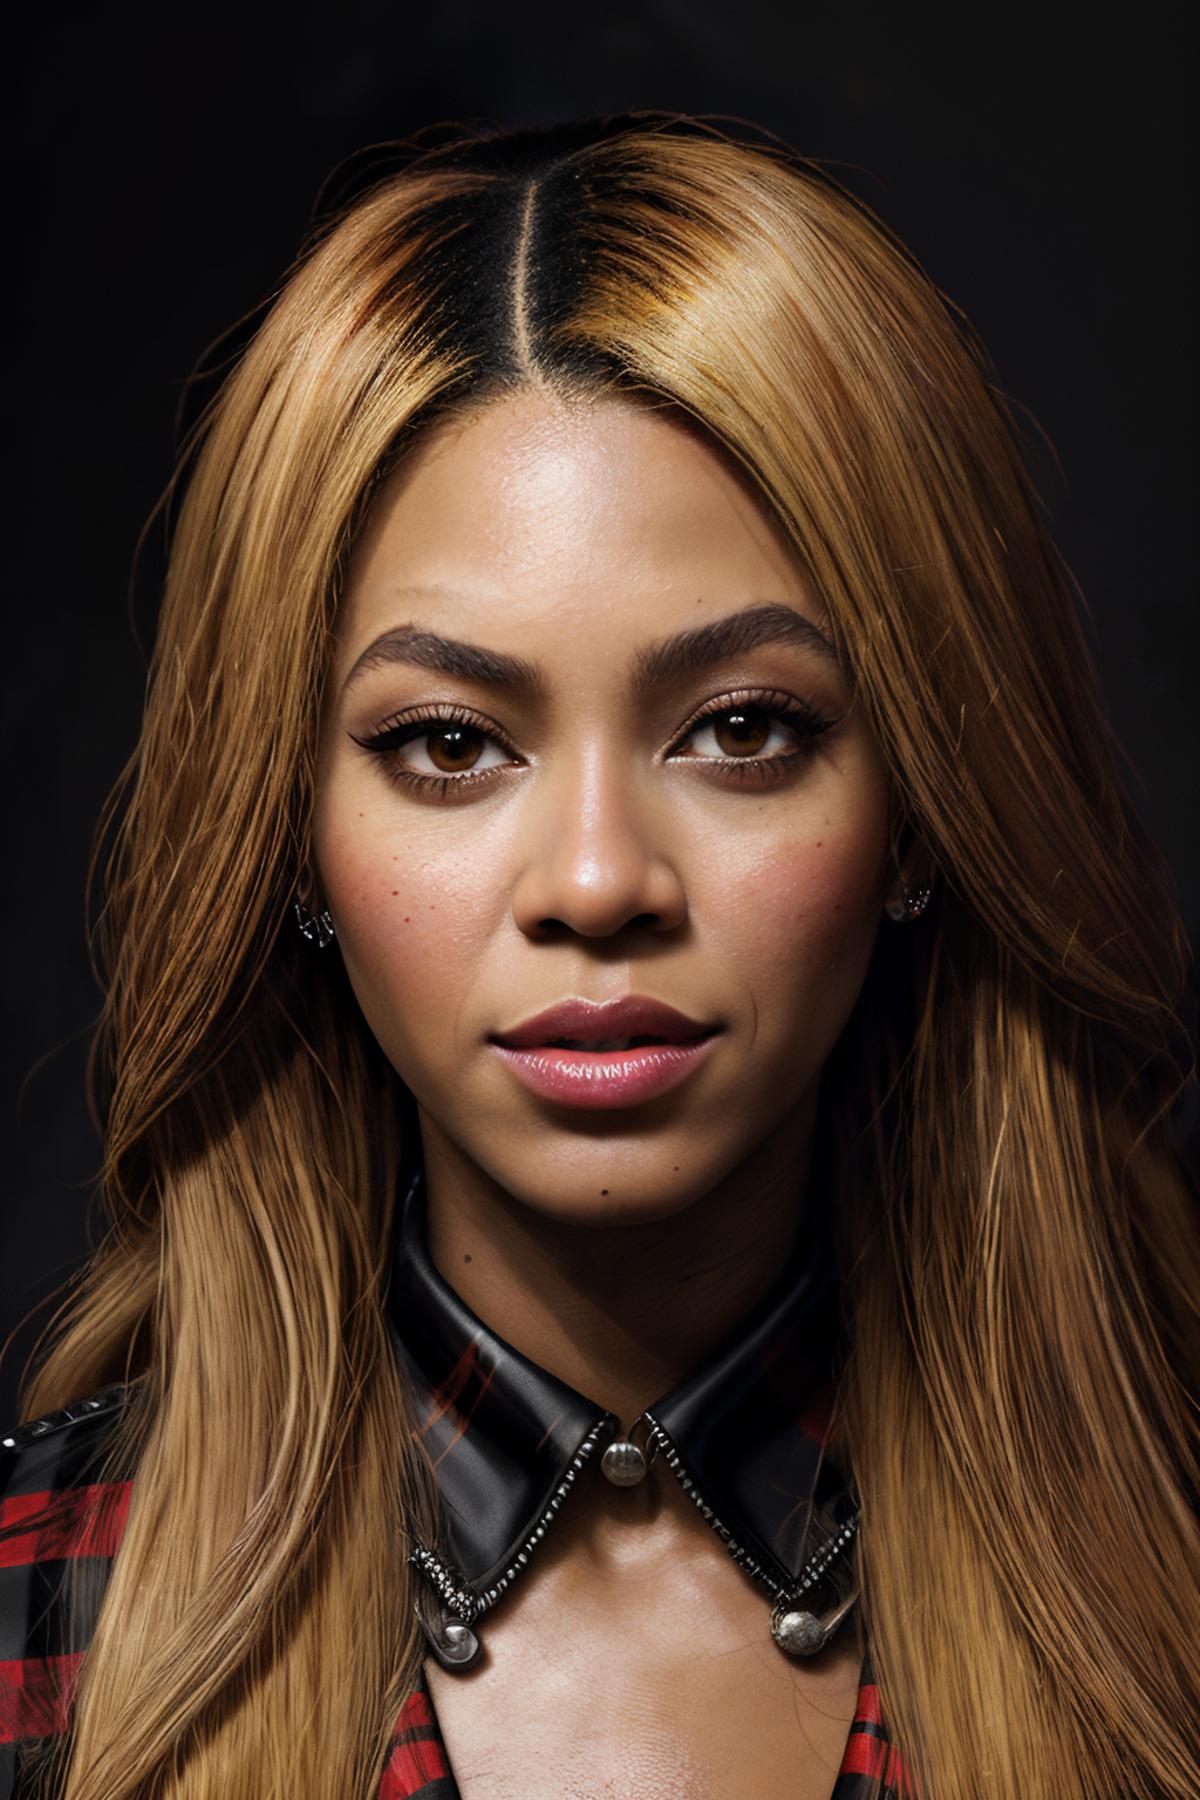 Beyonce image by frankyfrank2k